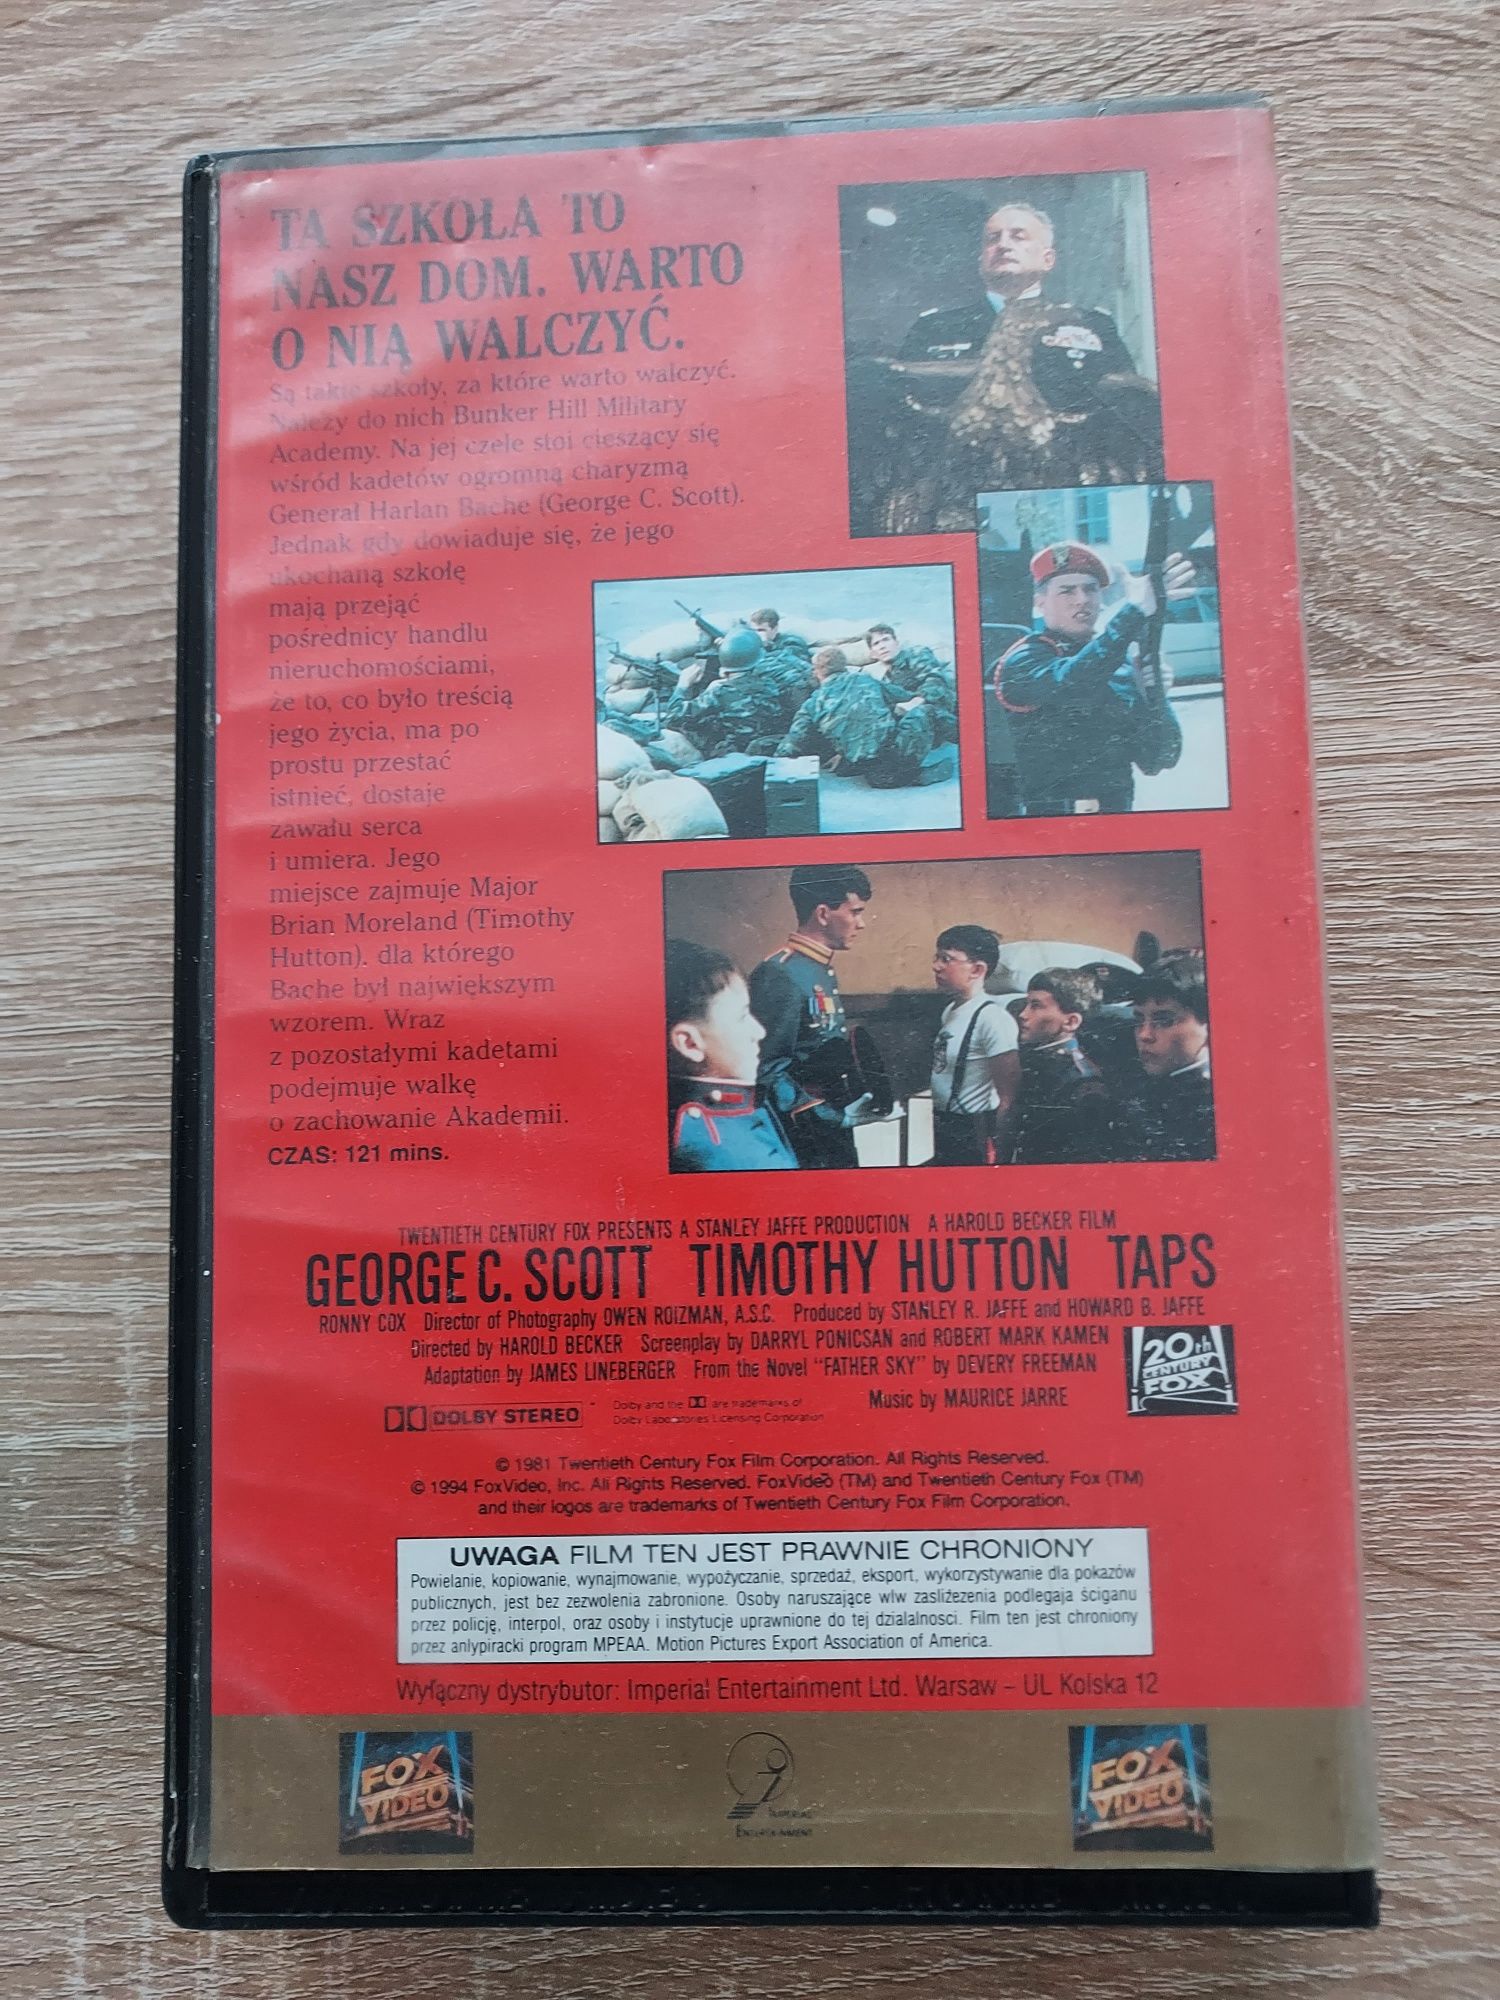 Szkoła Kadetów- Tom Cruise, Sean Penn- Film Kaseta VHS Polski Lektor